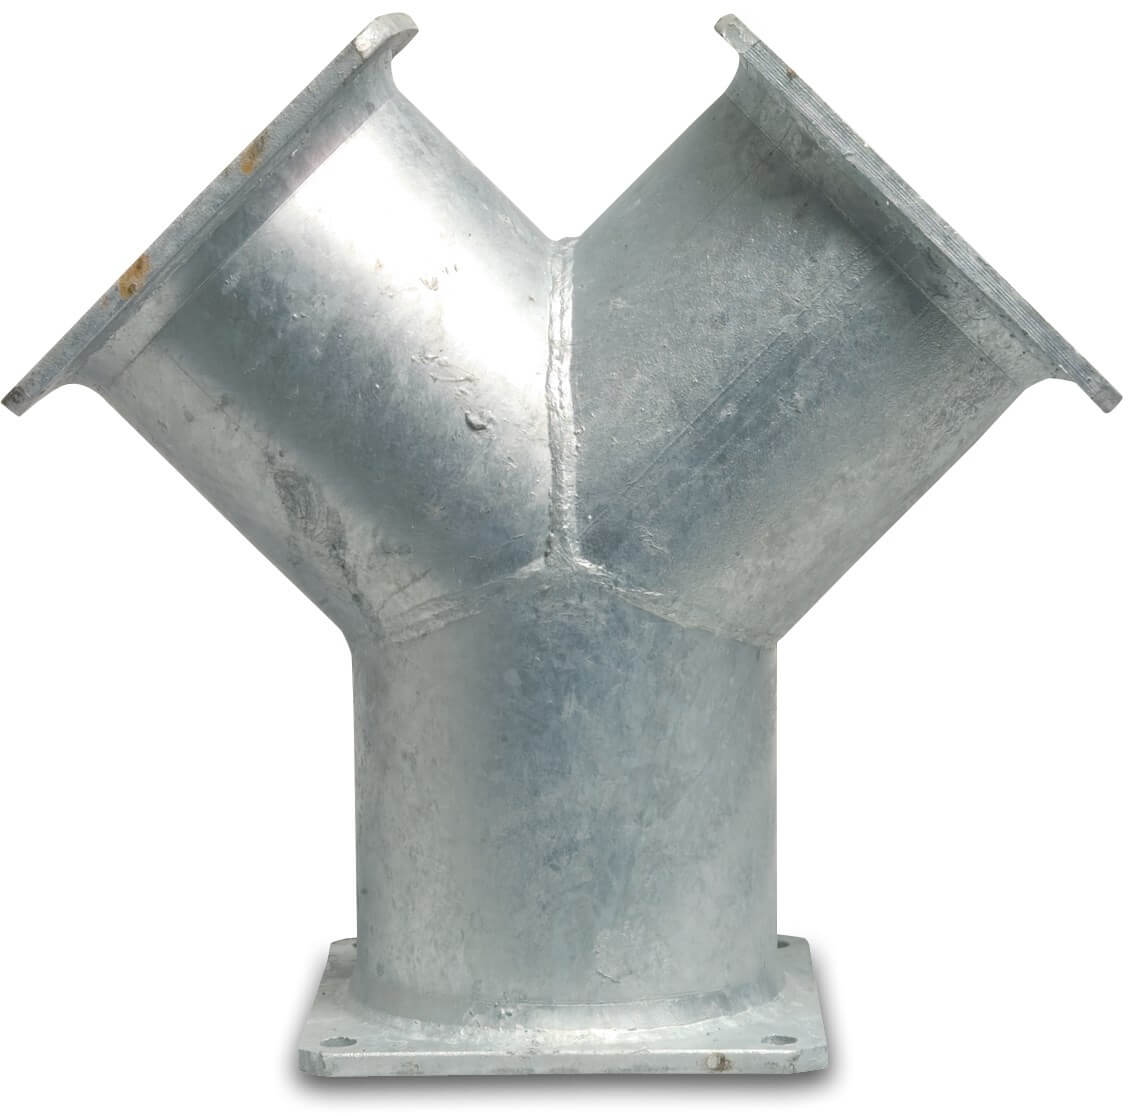 Y-piece 45° steel galvanised 6" square flange